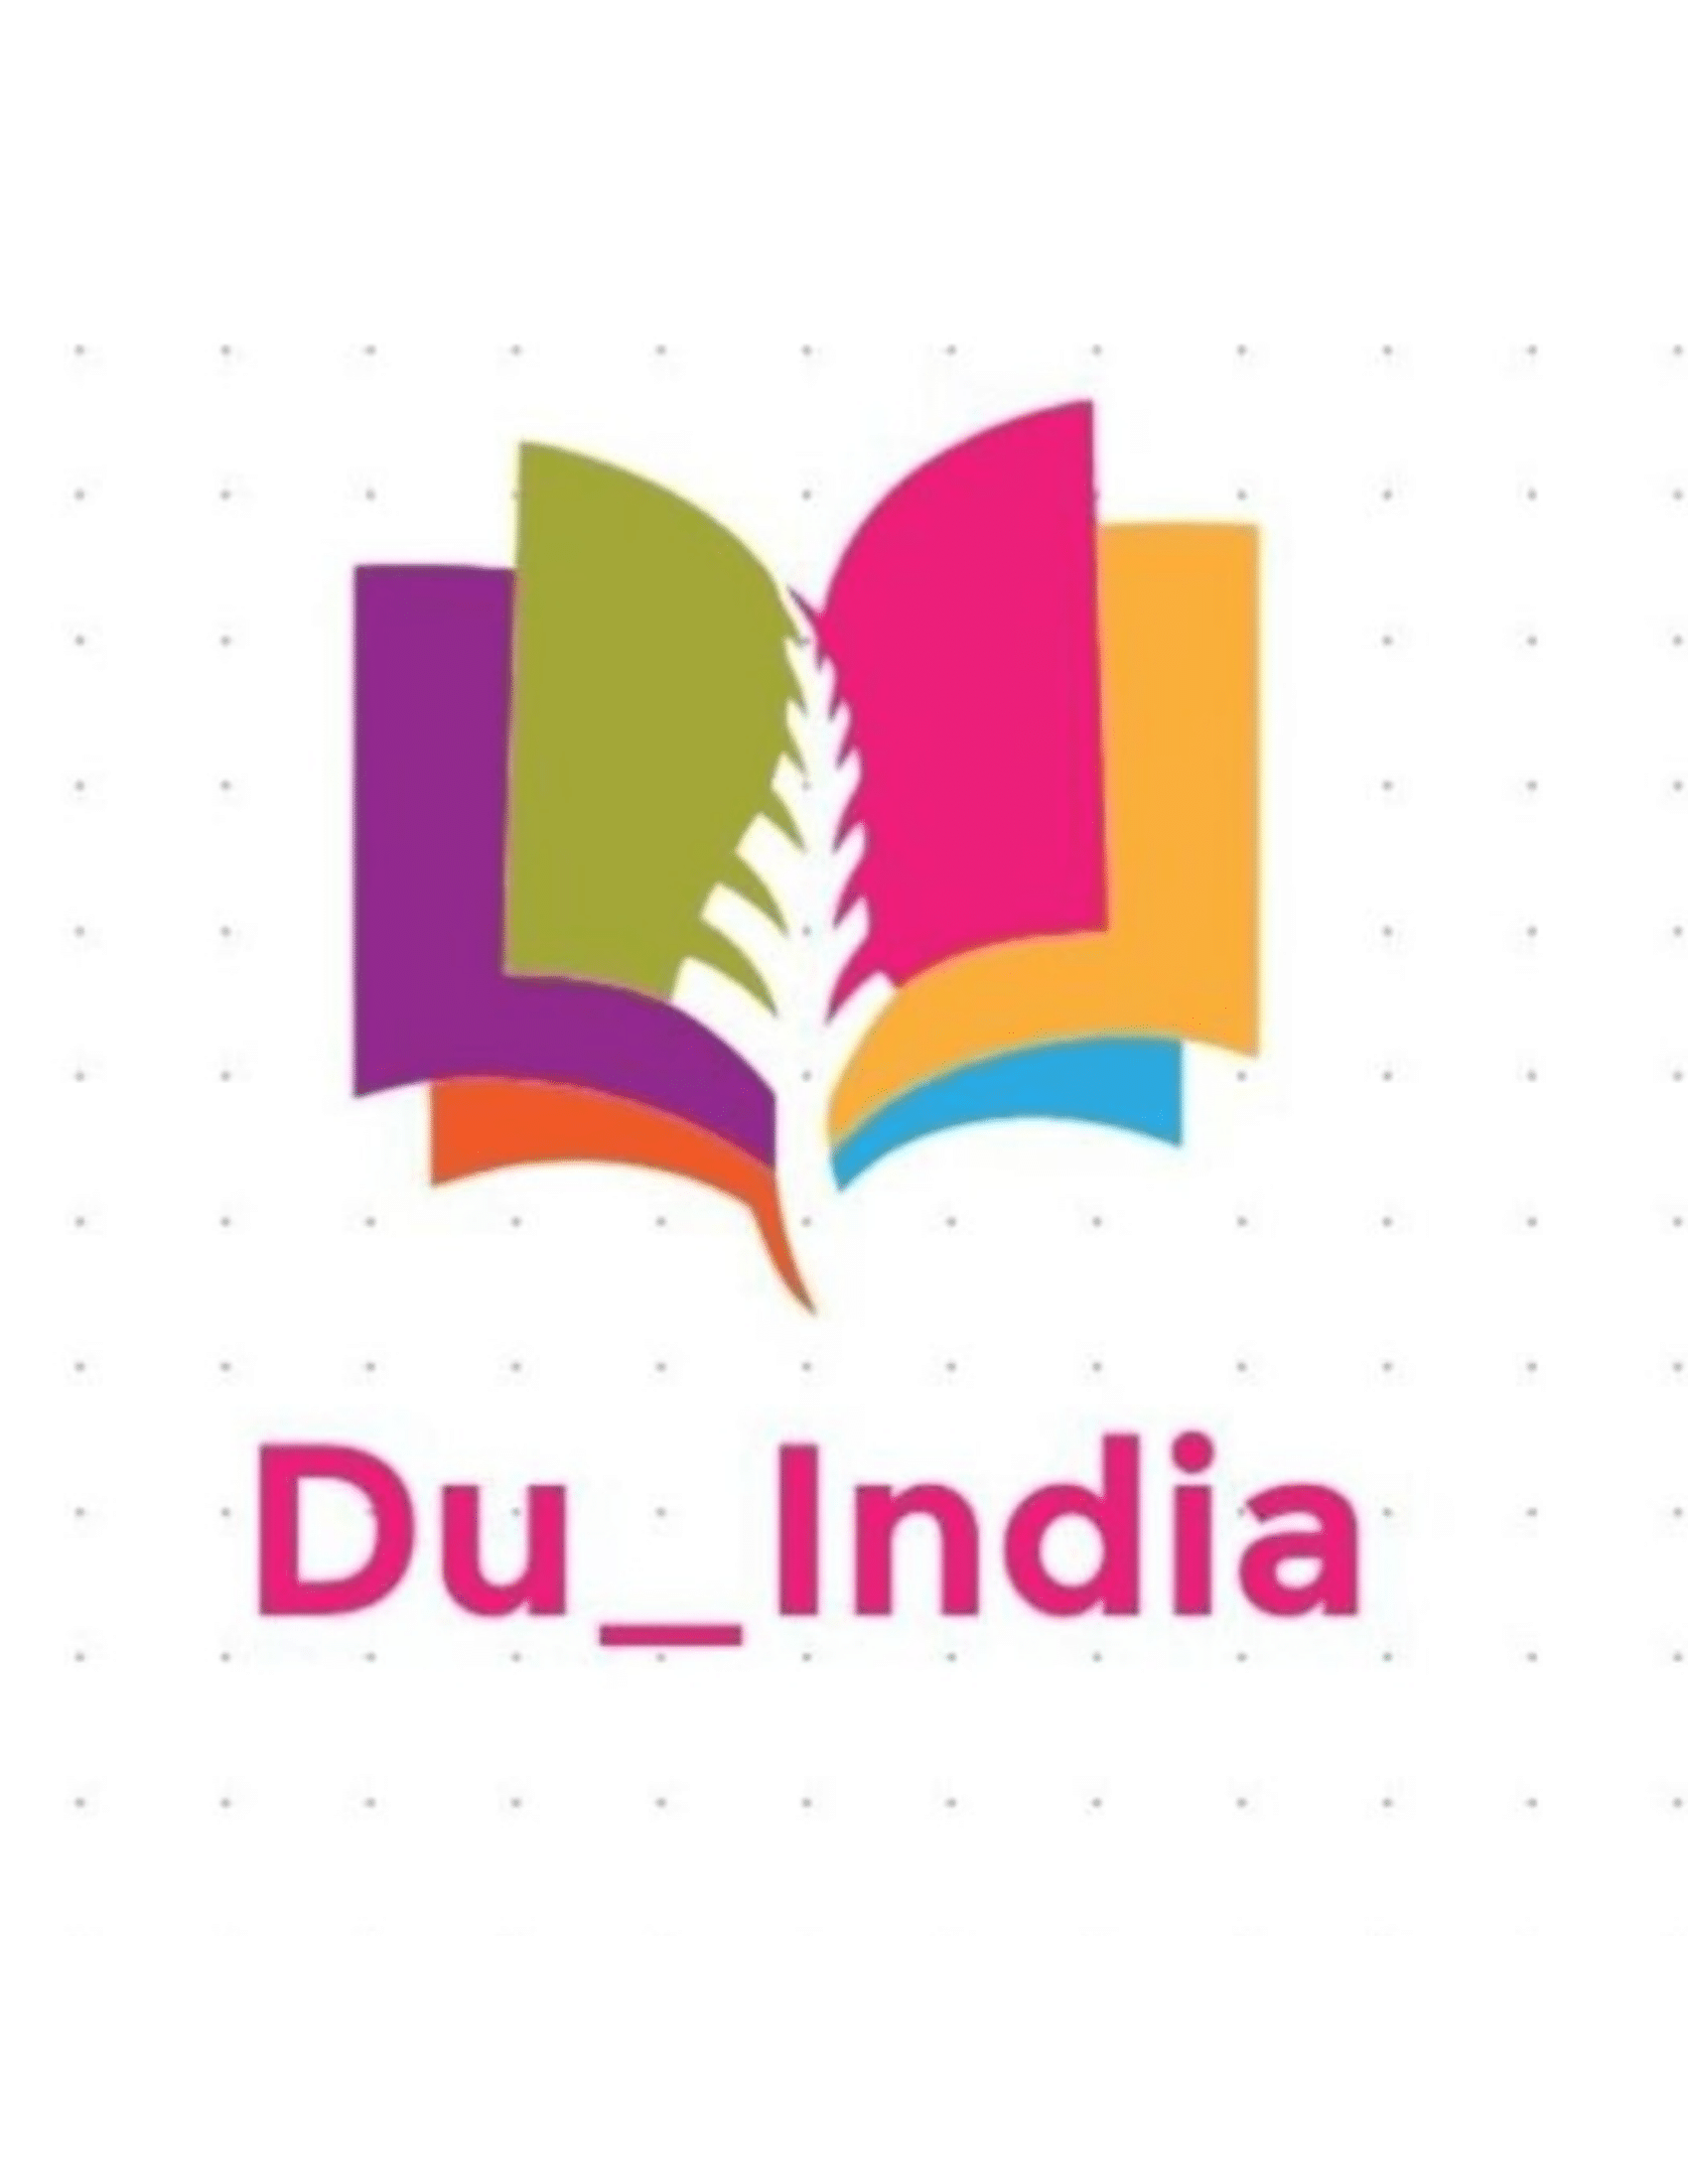 DU India